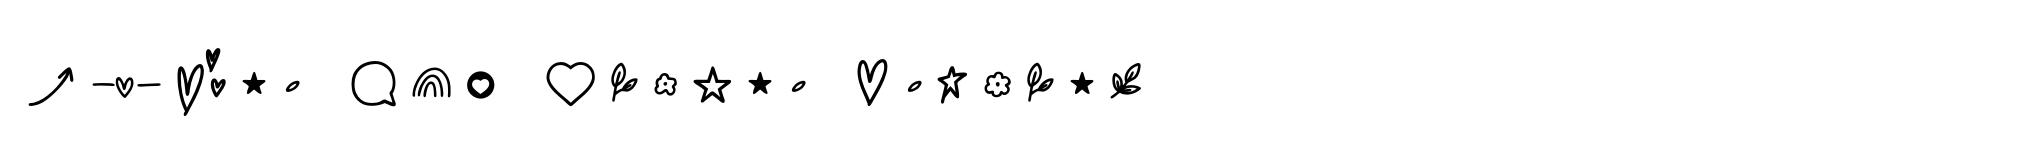 Girly and Lovely Symbols image